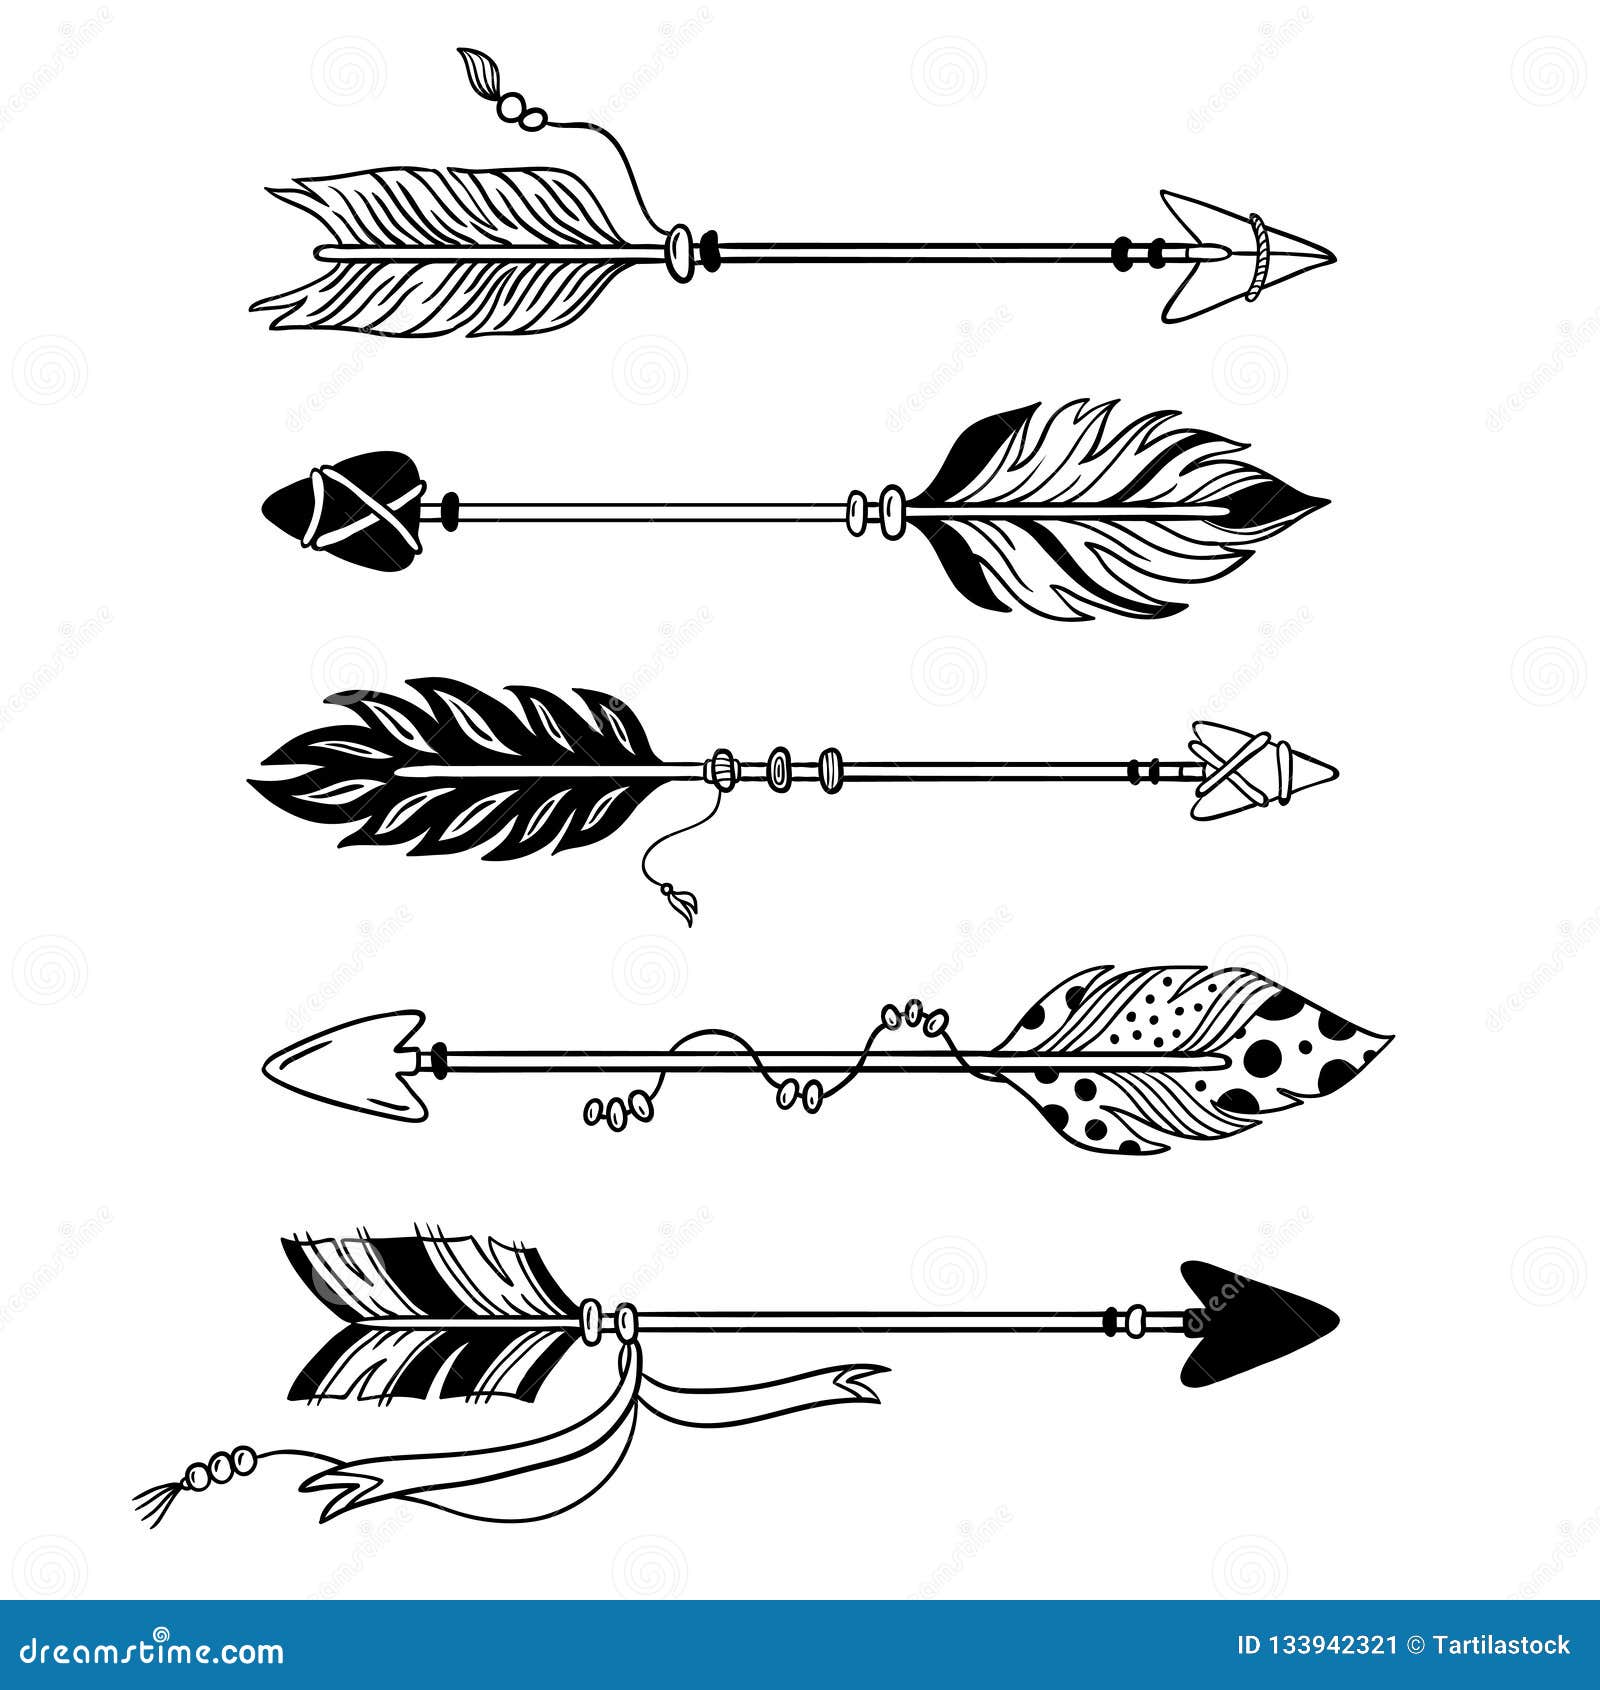 Arrowhead Tattoo Stock Illustrations – 169 Arrowhead Tattoo Stock Illustrations, Vectors & Clipart - Dreamstime